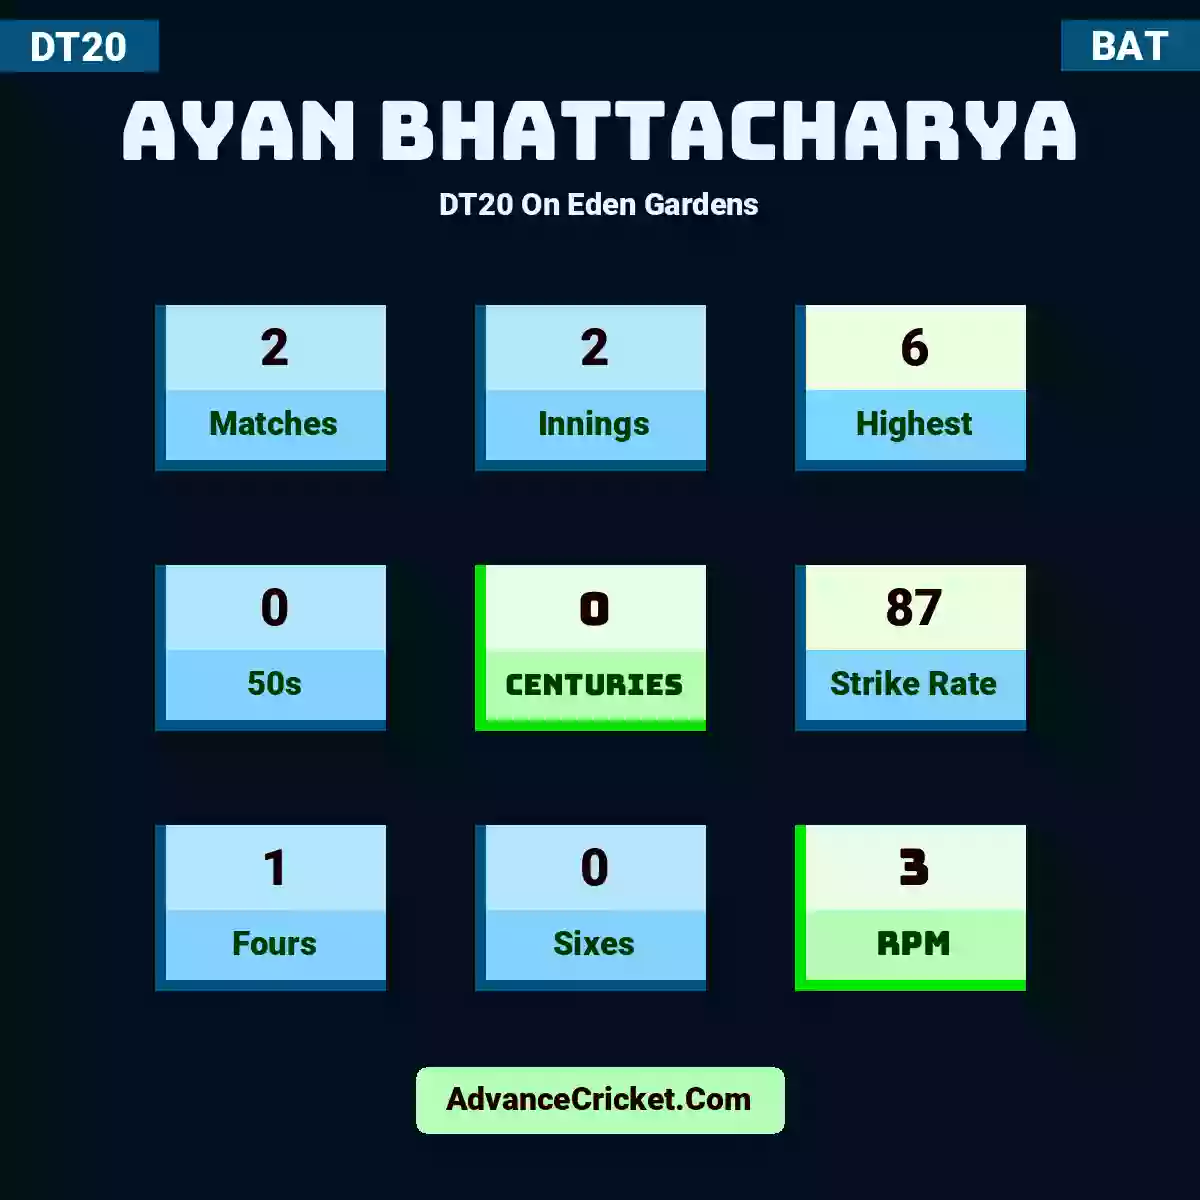 Ayan Bhattacharya DT20  On Eden Gardens, Ayan Bhattacharya played 2 matches, scored 6 runs as highest, 0 half-centuries, and 0 centuries, with a strike rate of 87. A.Bhattacharya hit 1 fours and 0 sixes, with an RPM of 3.